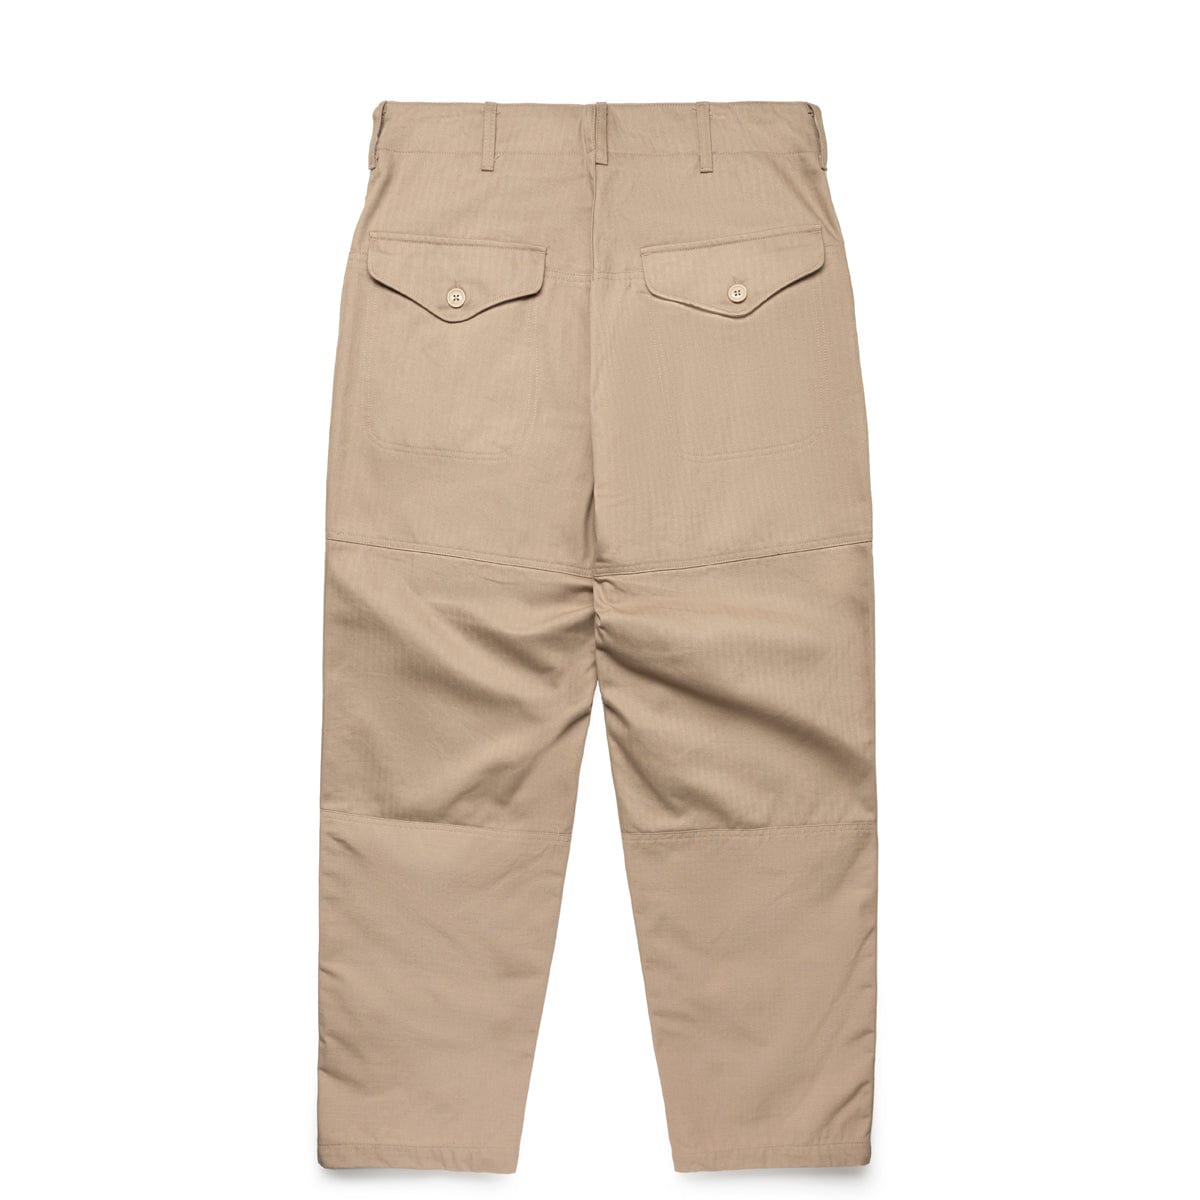 325369. 36 38. KHAKI Retail $ 75.00 Cotton Casual Pants by SAVANE.  PERFORMANCE CHINO Whs A: 1